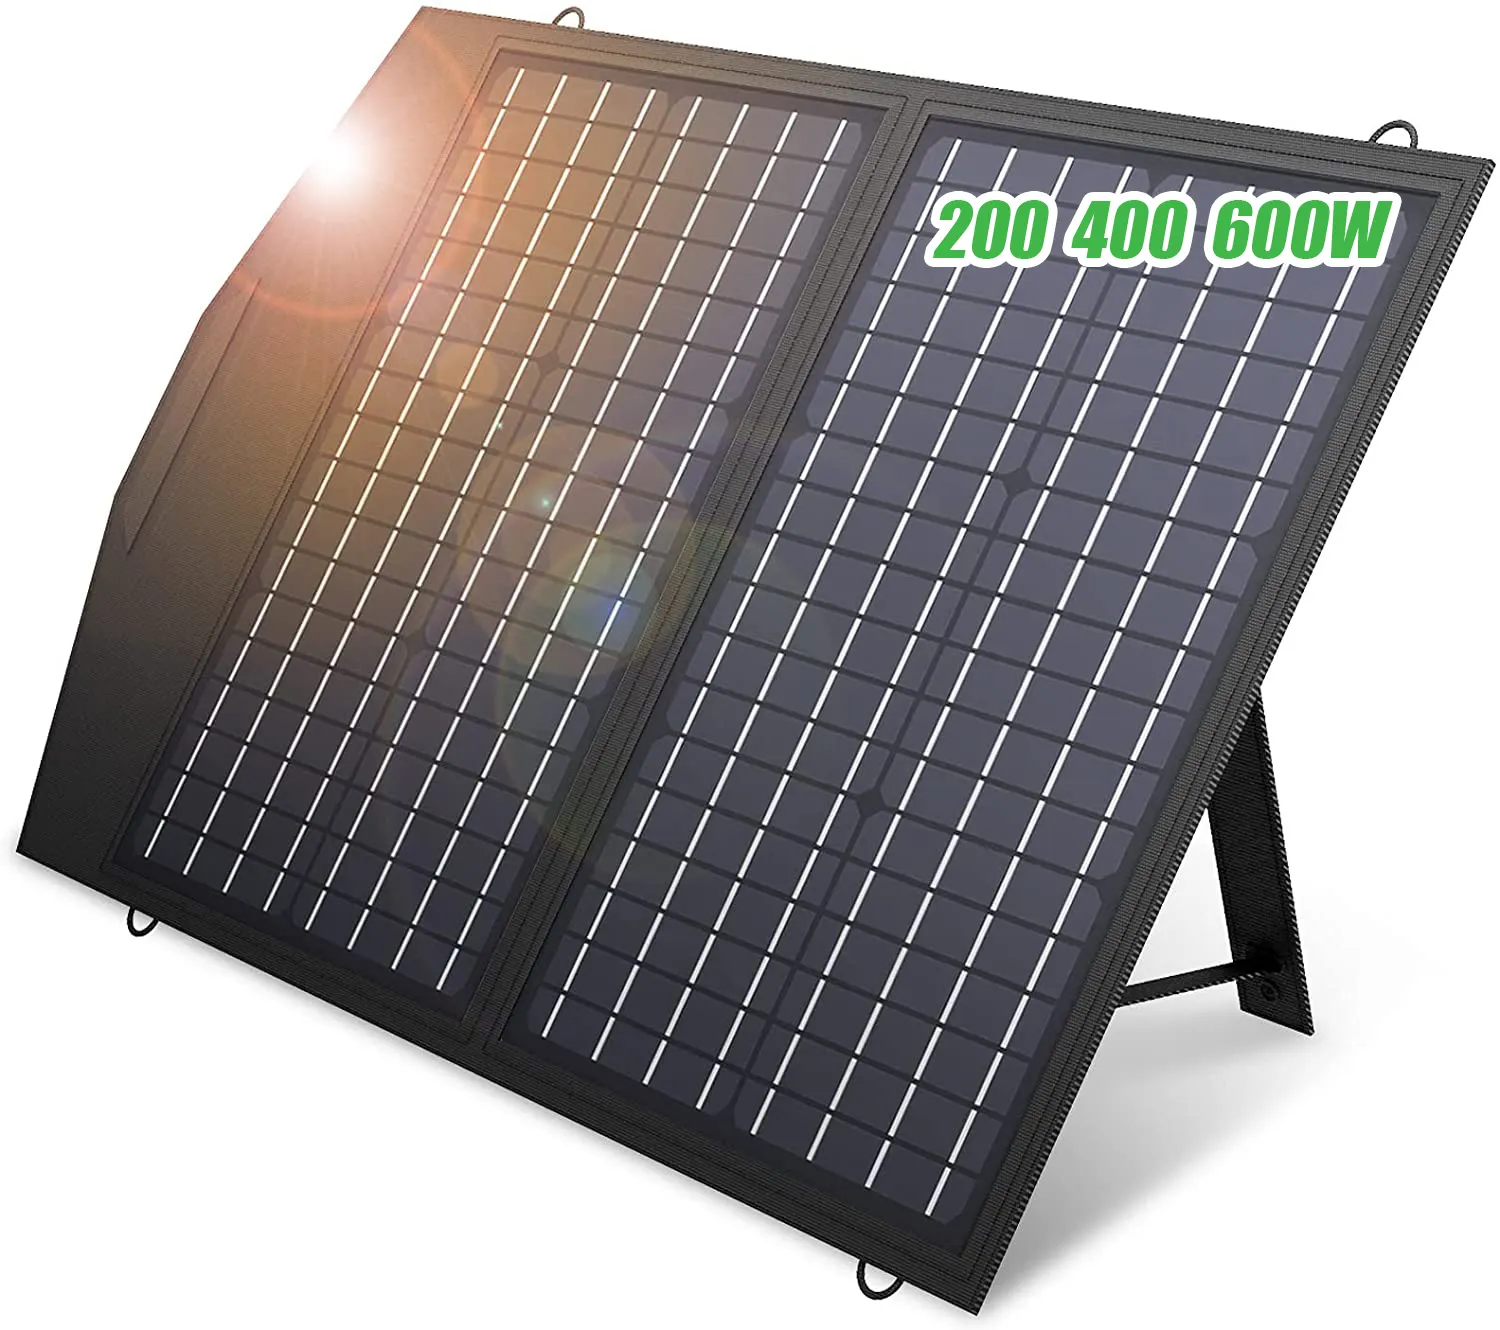 200W 400W 600W katlanabilir güneş paneli sistemi taşınabilir esnek güneş paneli ev için güneş jeneratör CA1479-SL